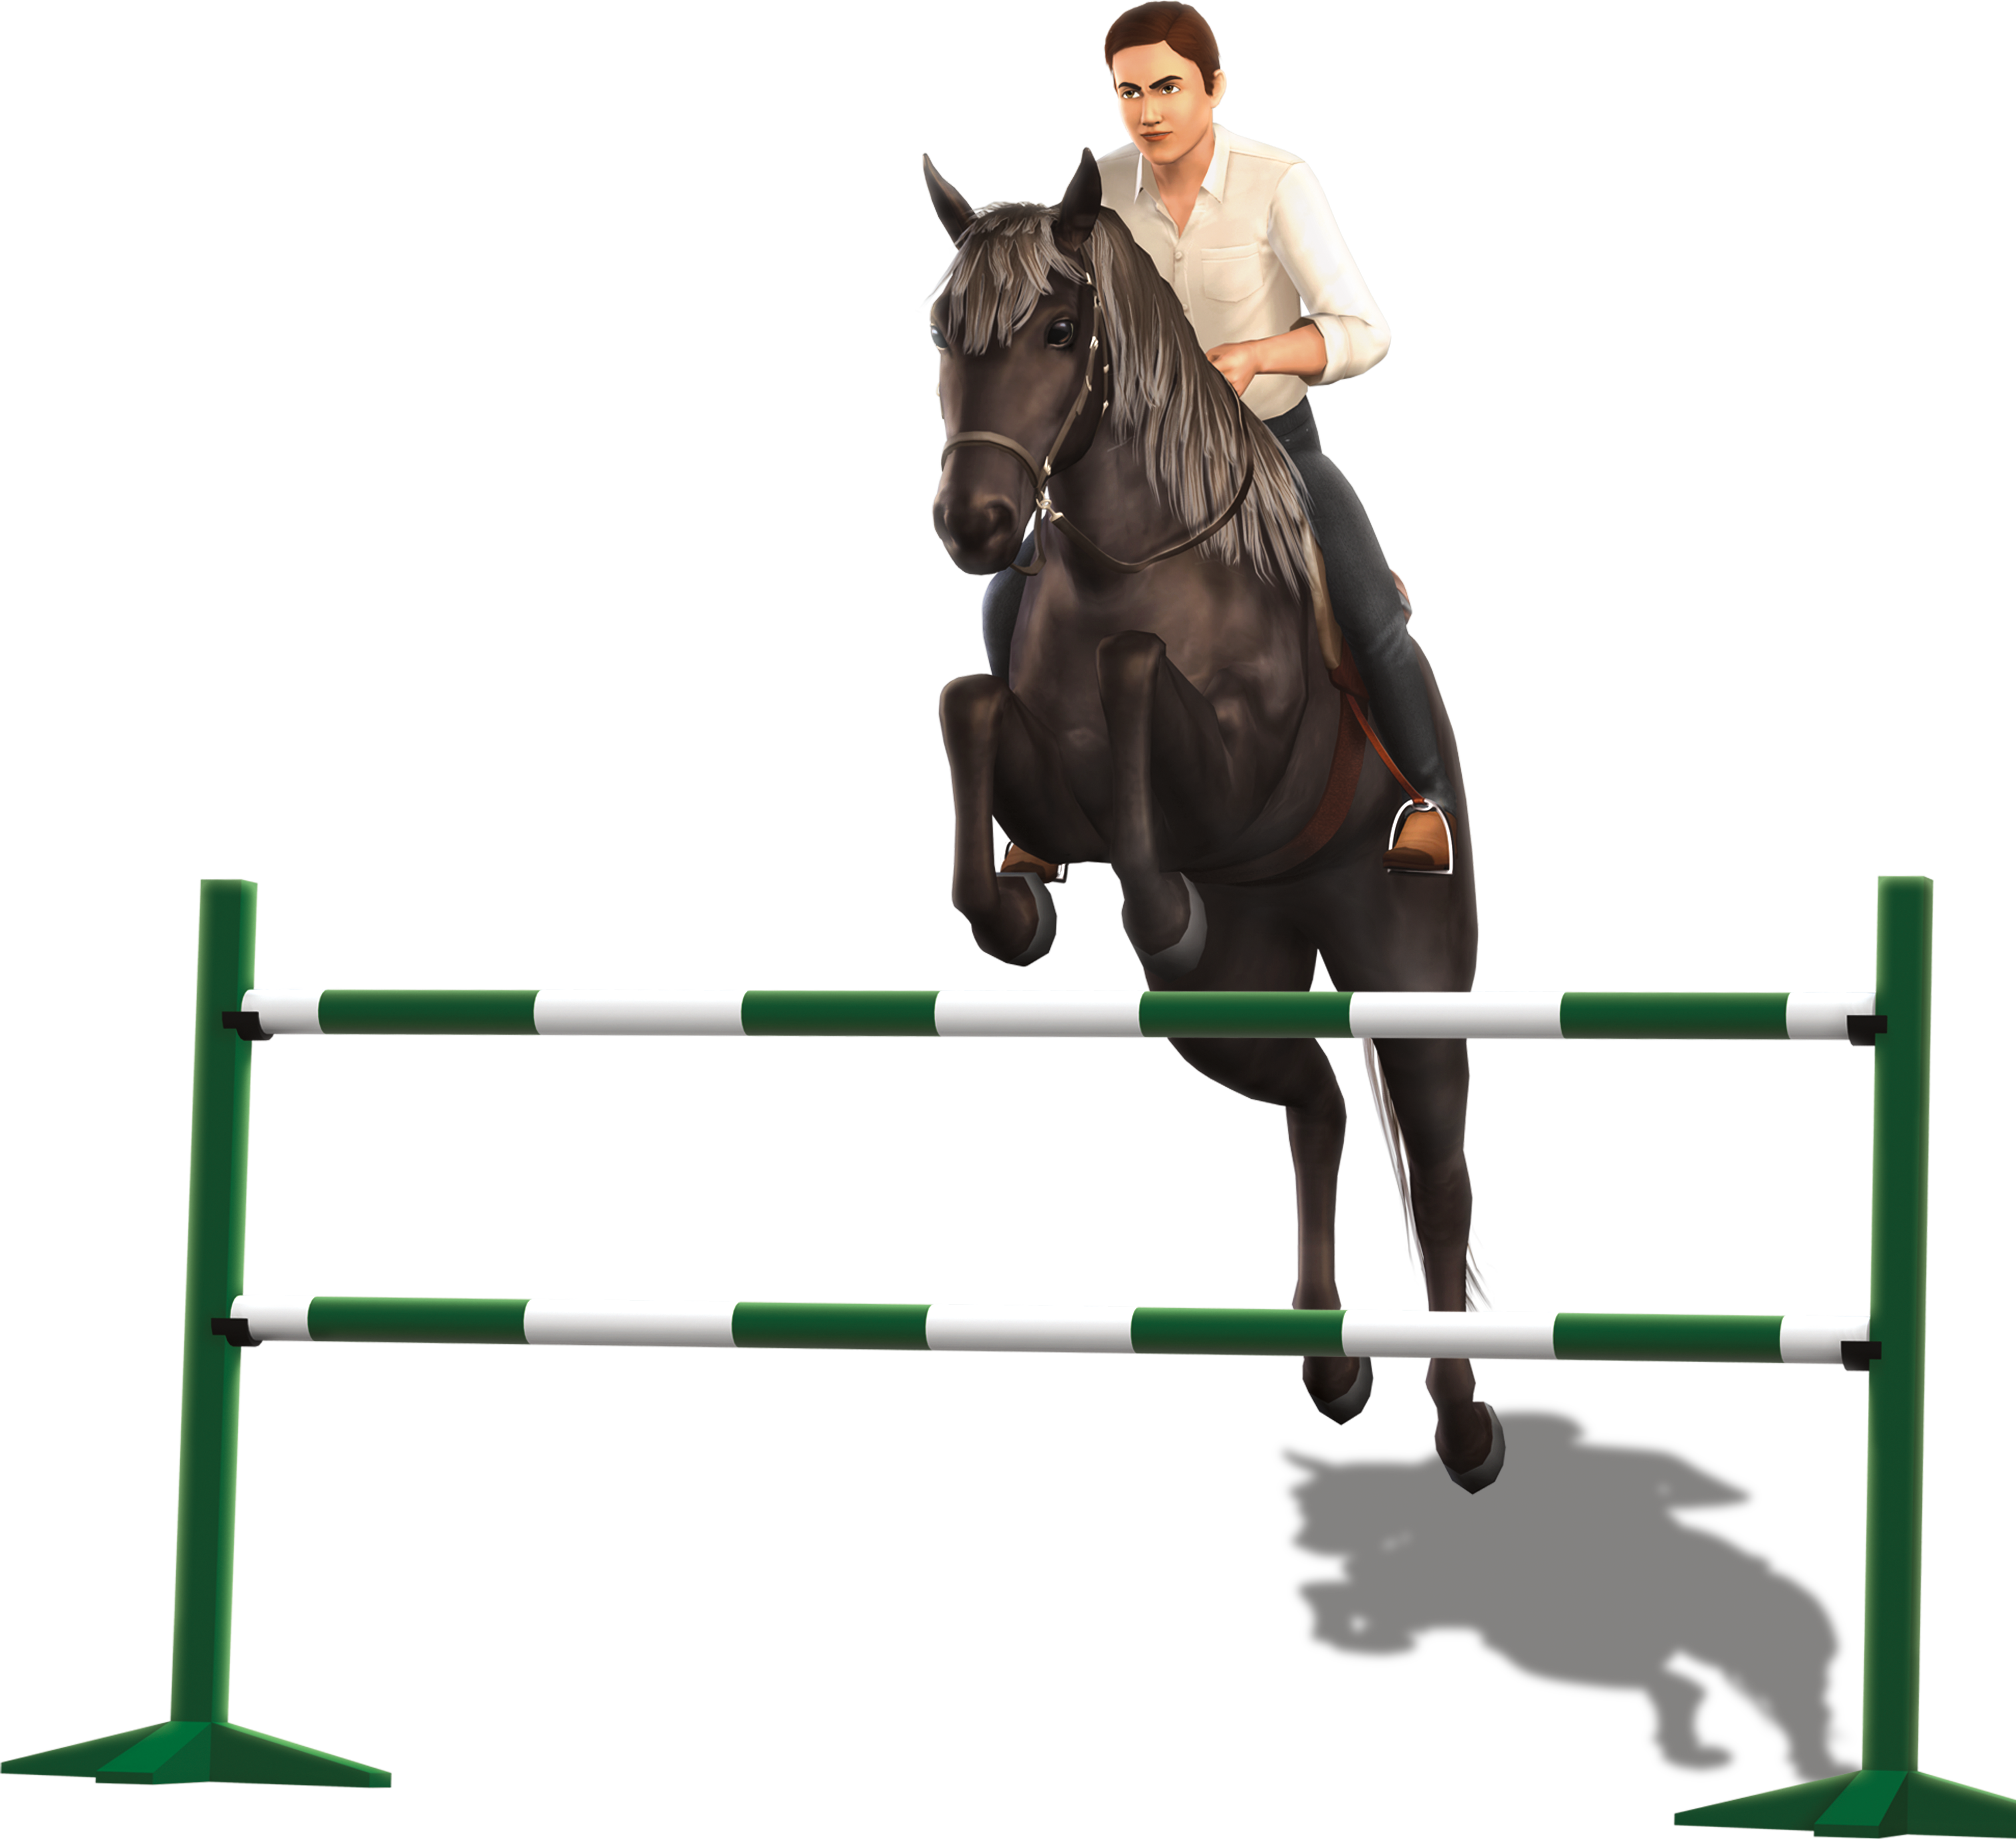 Sims Horse Show Jumping Pets English Riding PNG Image